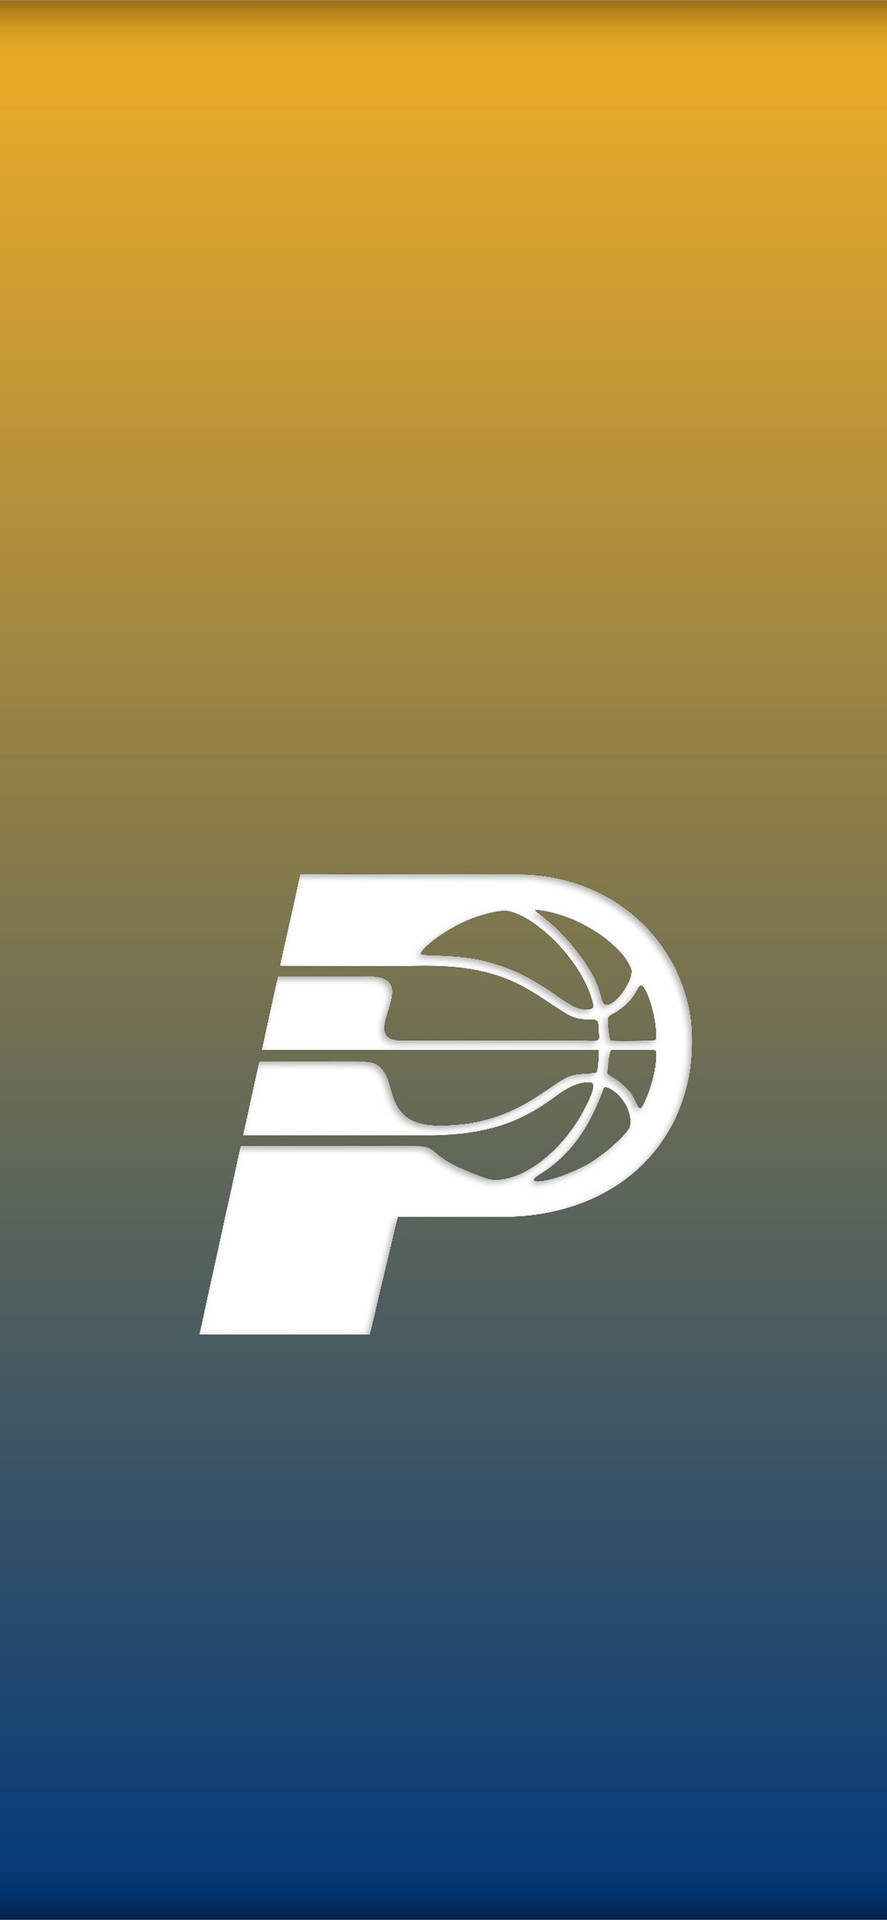 Indiana Pacers Minimalist Team Logo Background